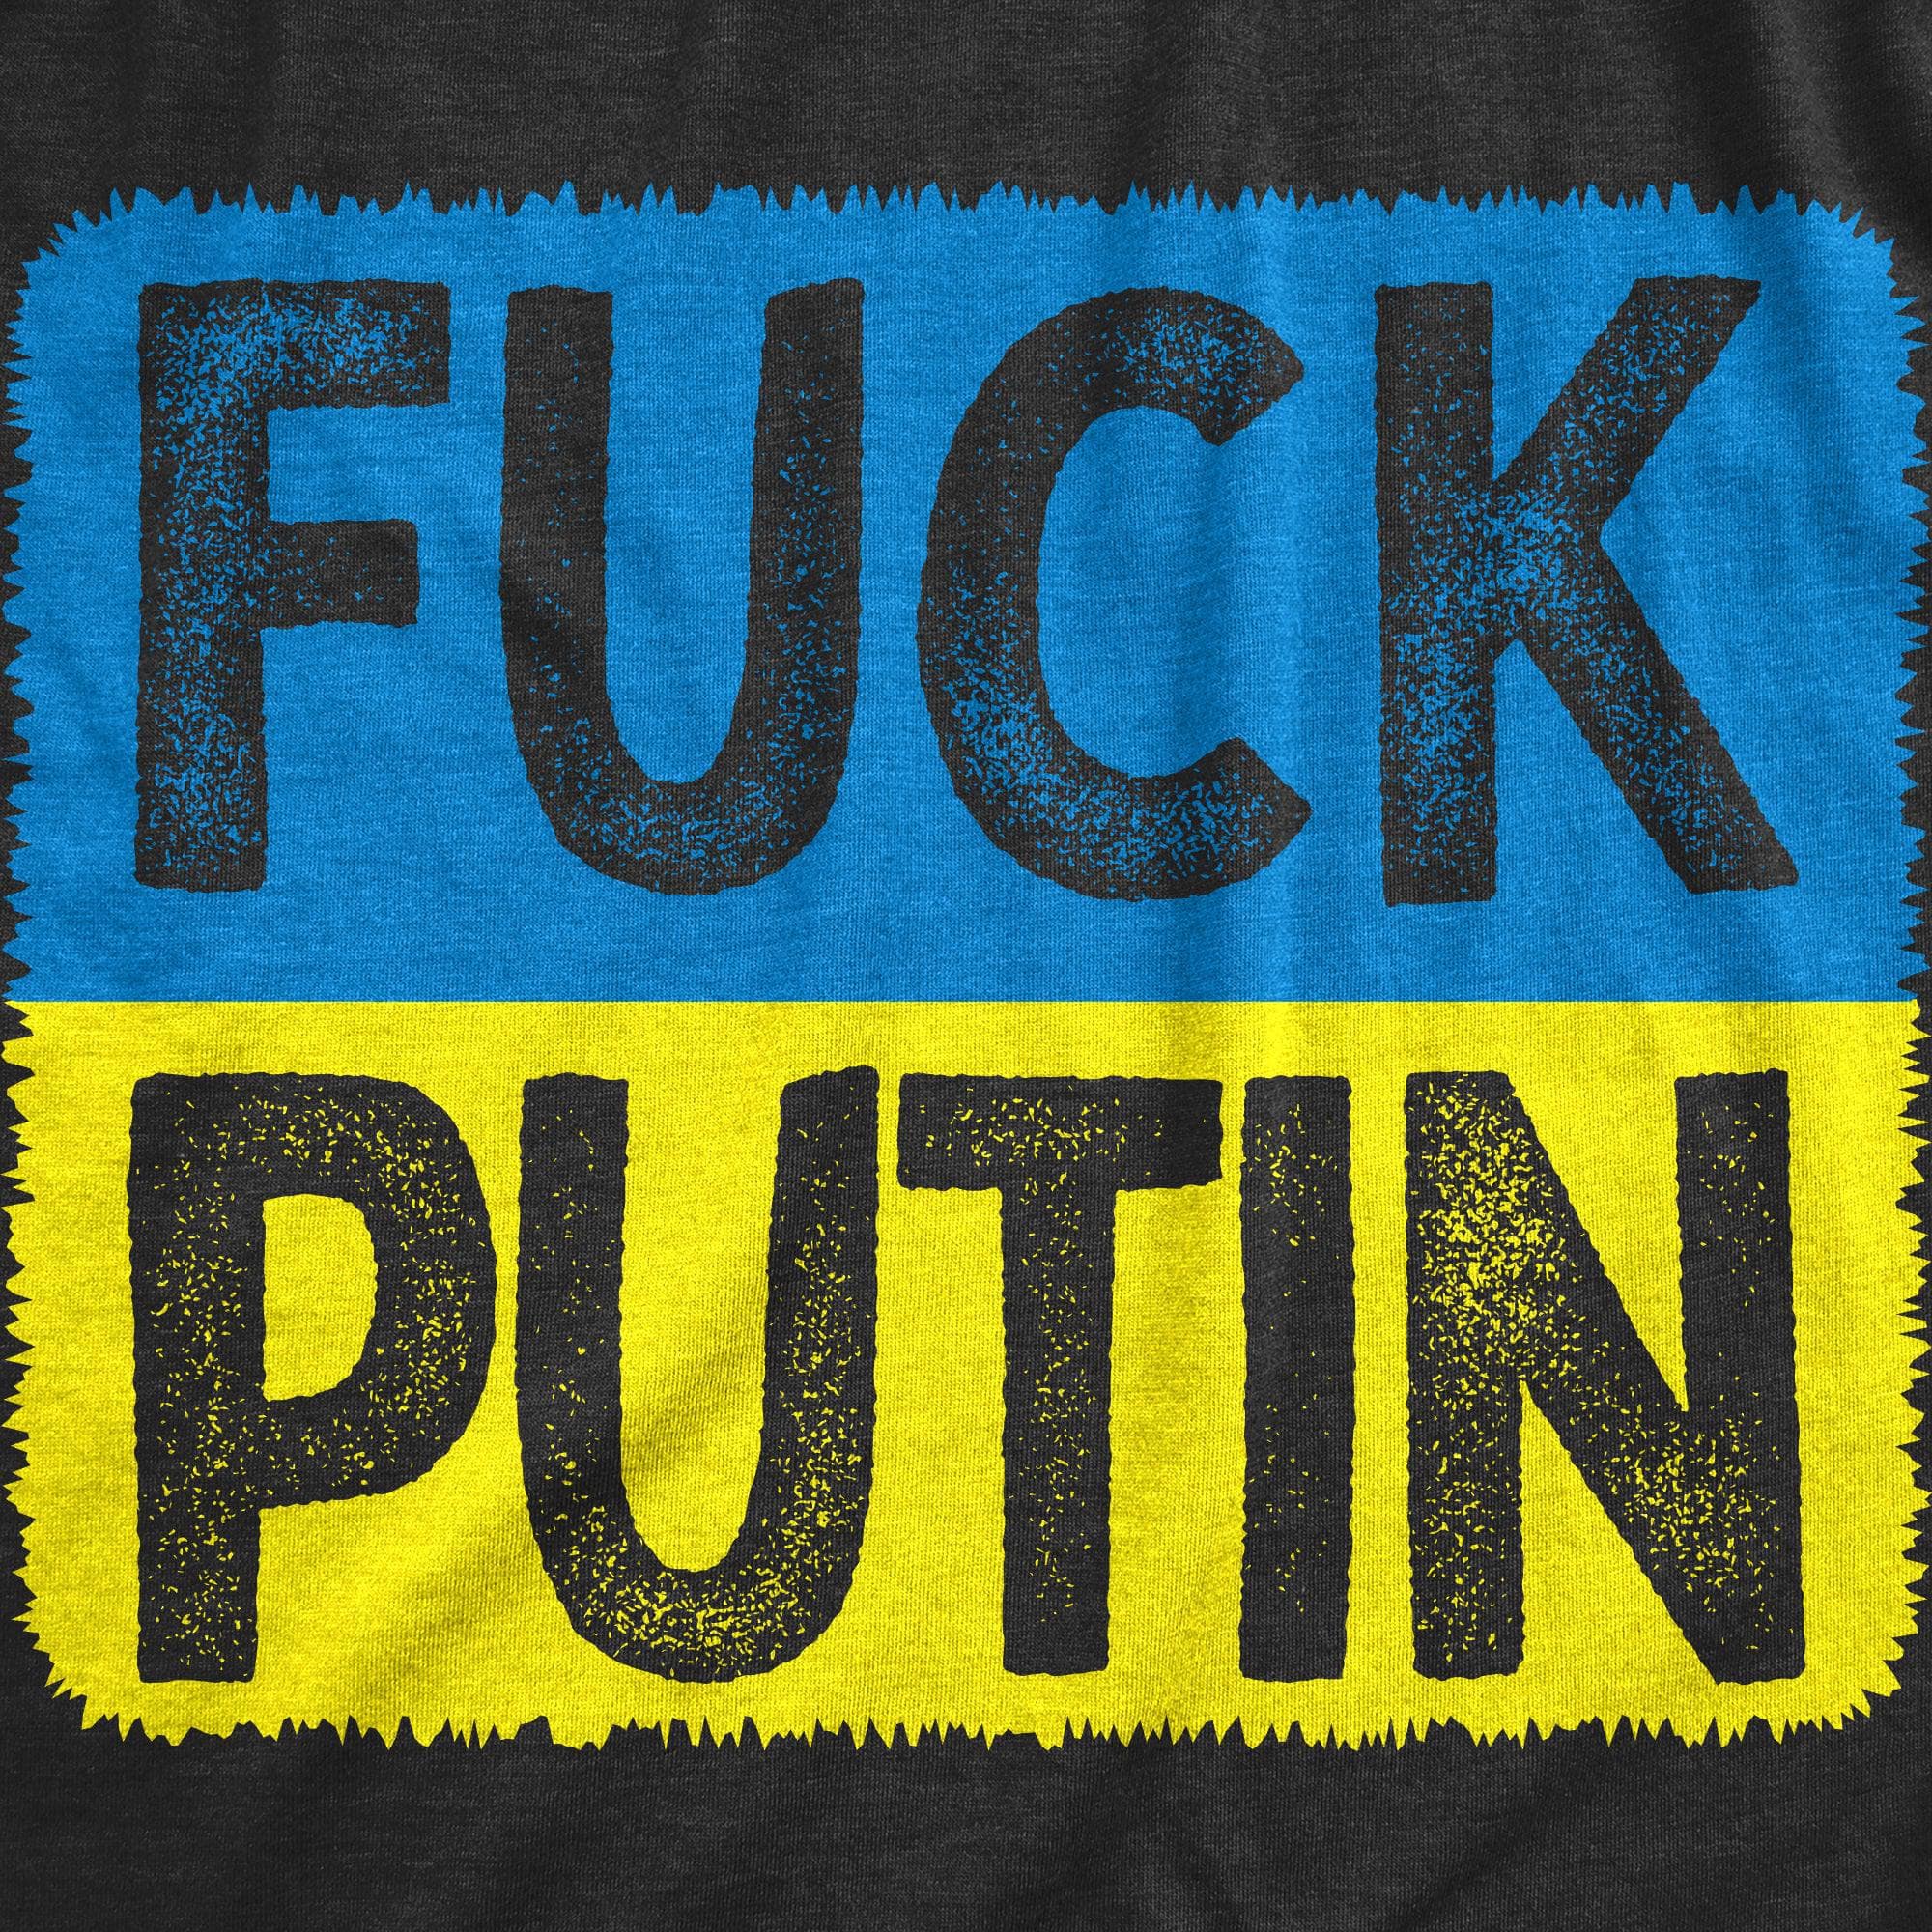 Fuck Putin Men's Tshirt  -  Crazy Dog T-Shirts